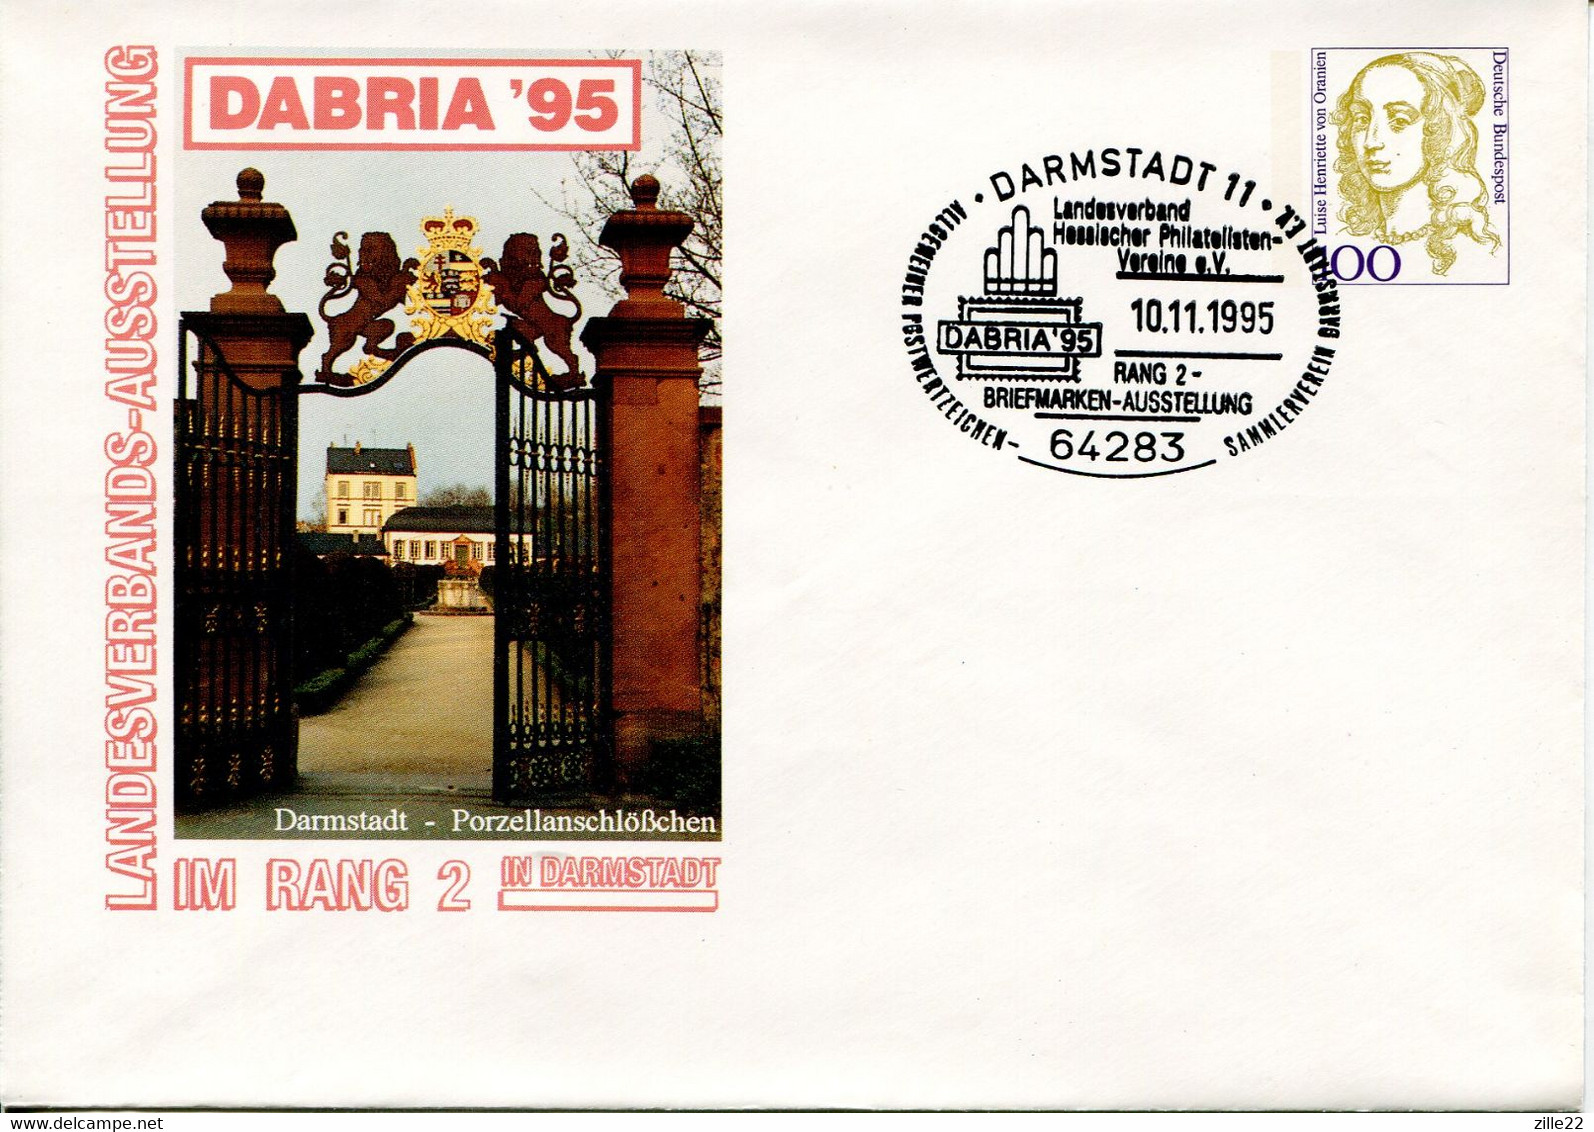 Germany Deutschland Postal Stationery - Cover - Von Oranien Design - Stamp Exhibition Darmstadt - Private Covers - Used